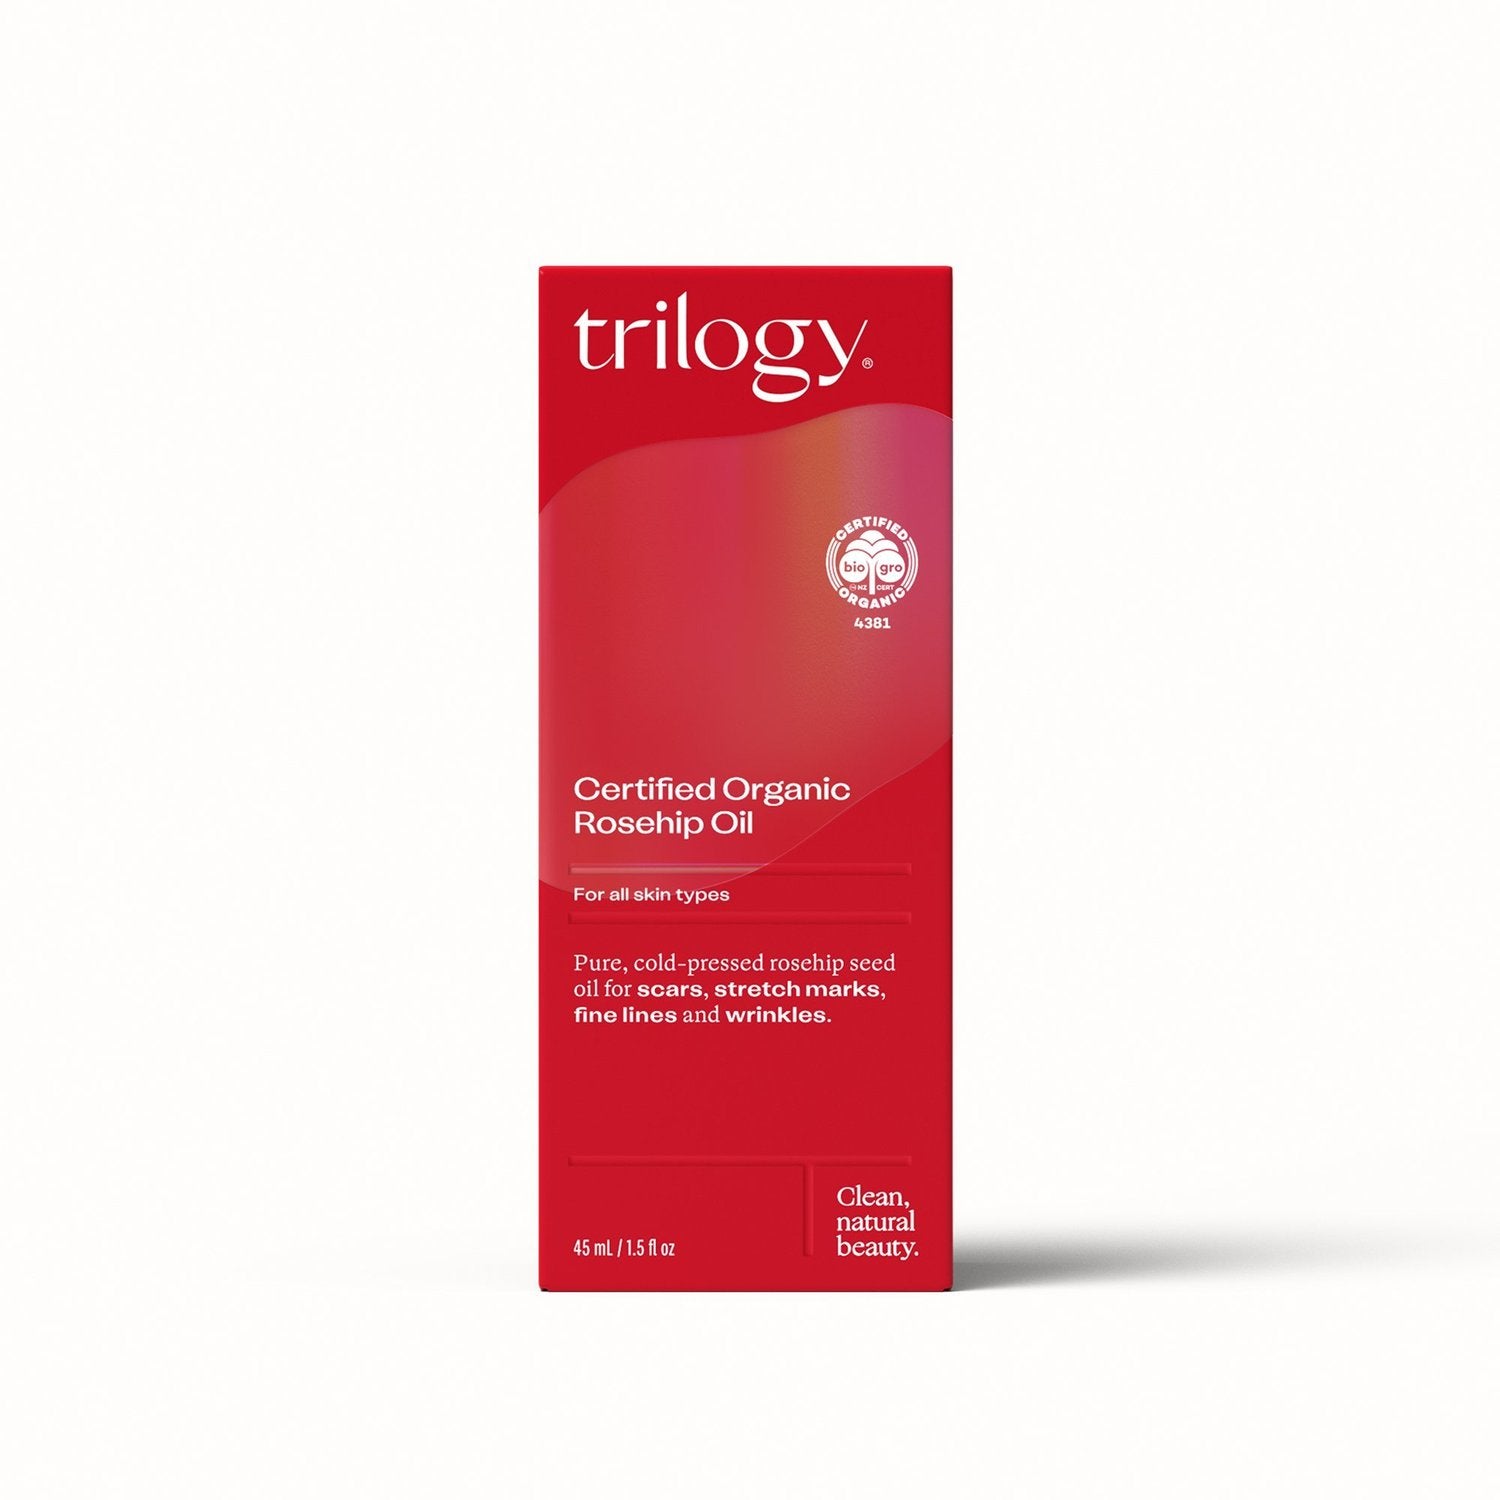 Trilogy Certified Organic Rosehip Oil 45ml.